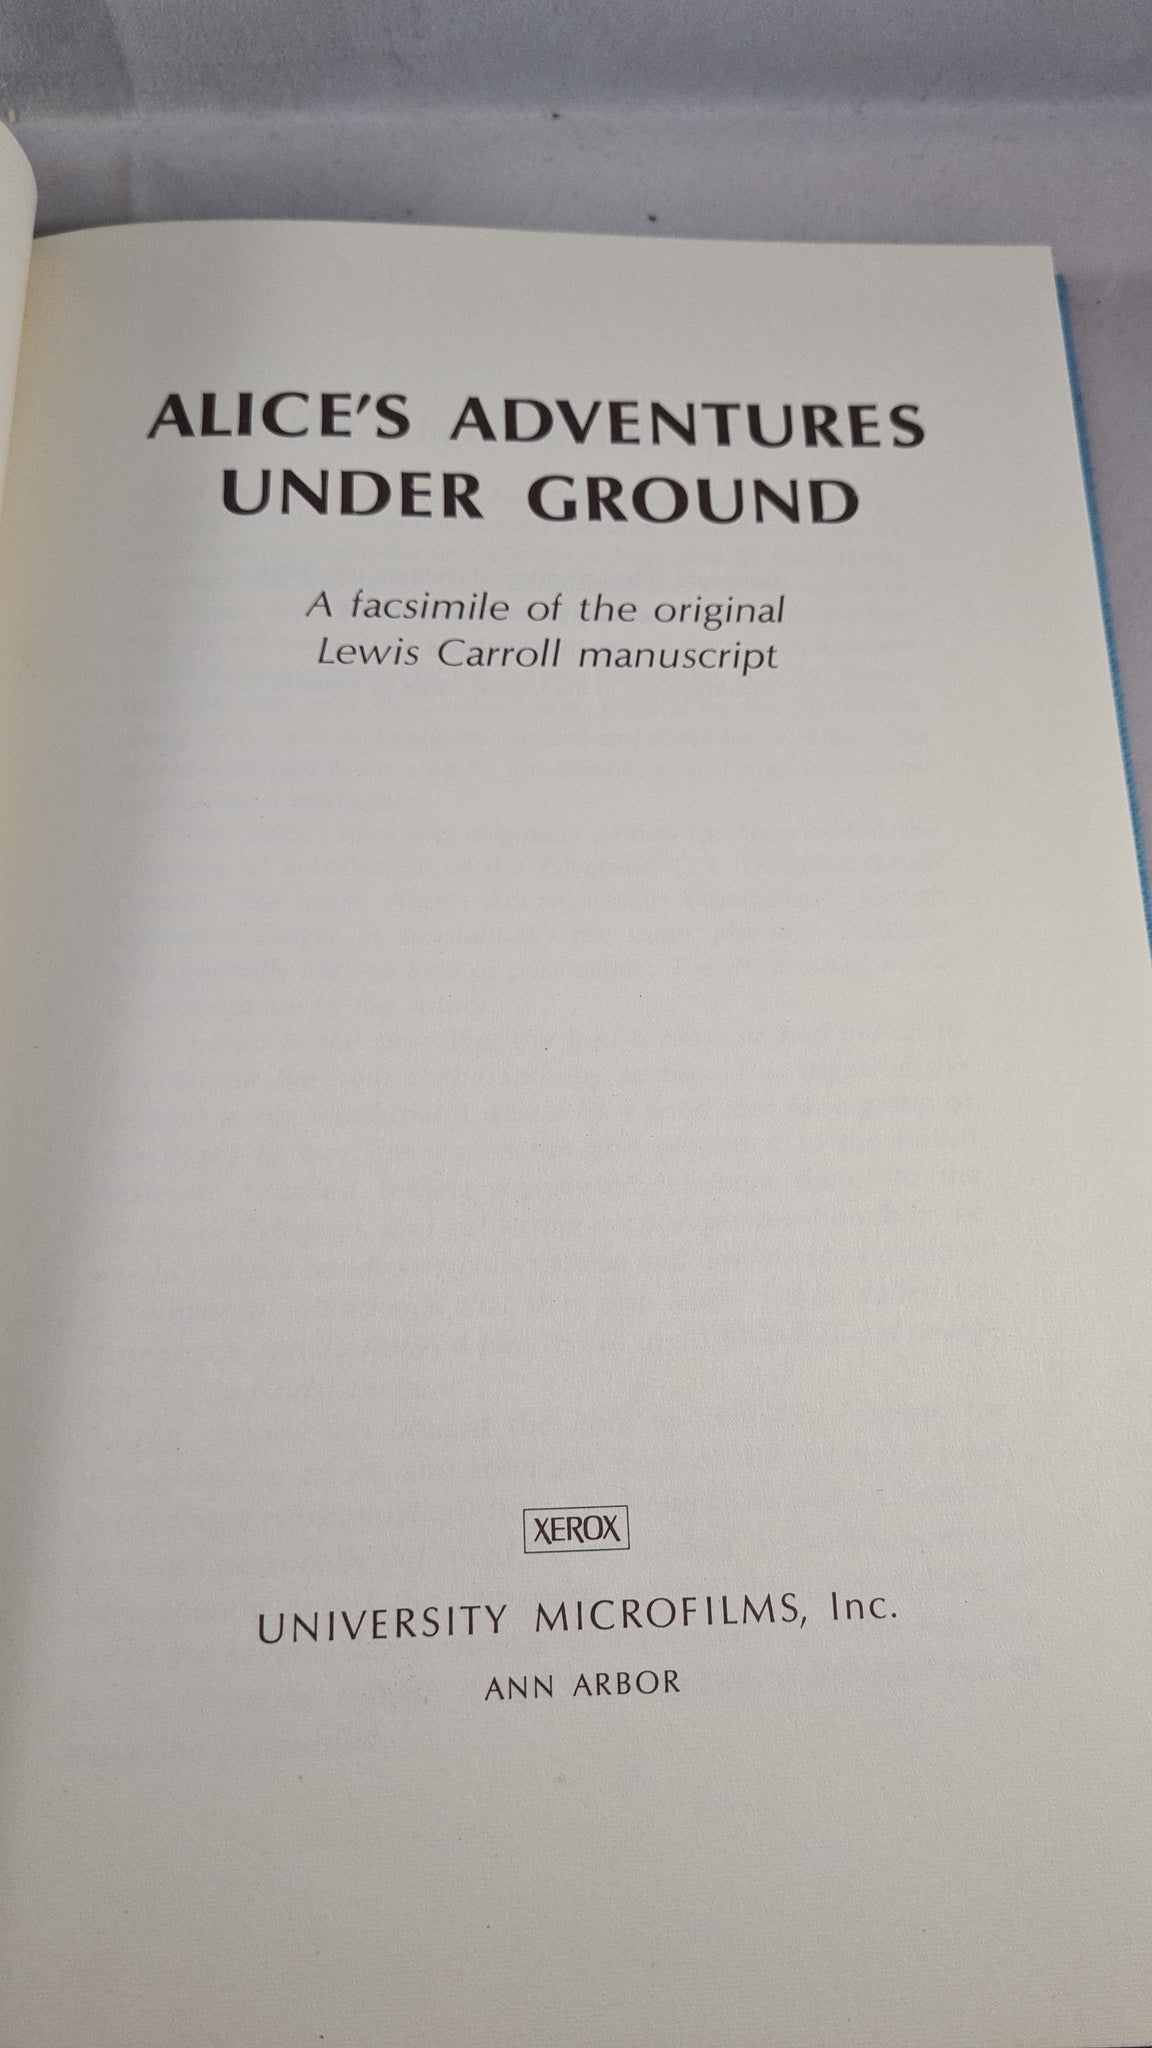 Carroll　Under　manuscript　–　Xerox,　Lewis　Richard　Dalby's　Adventures　Alice's　196　Ground,　Library